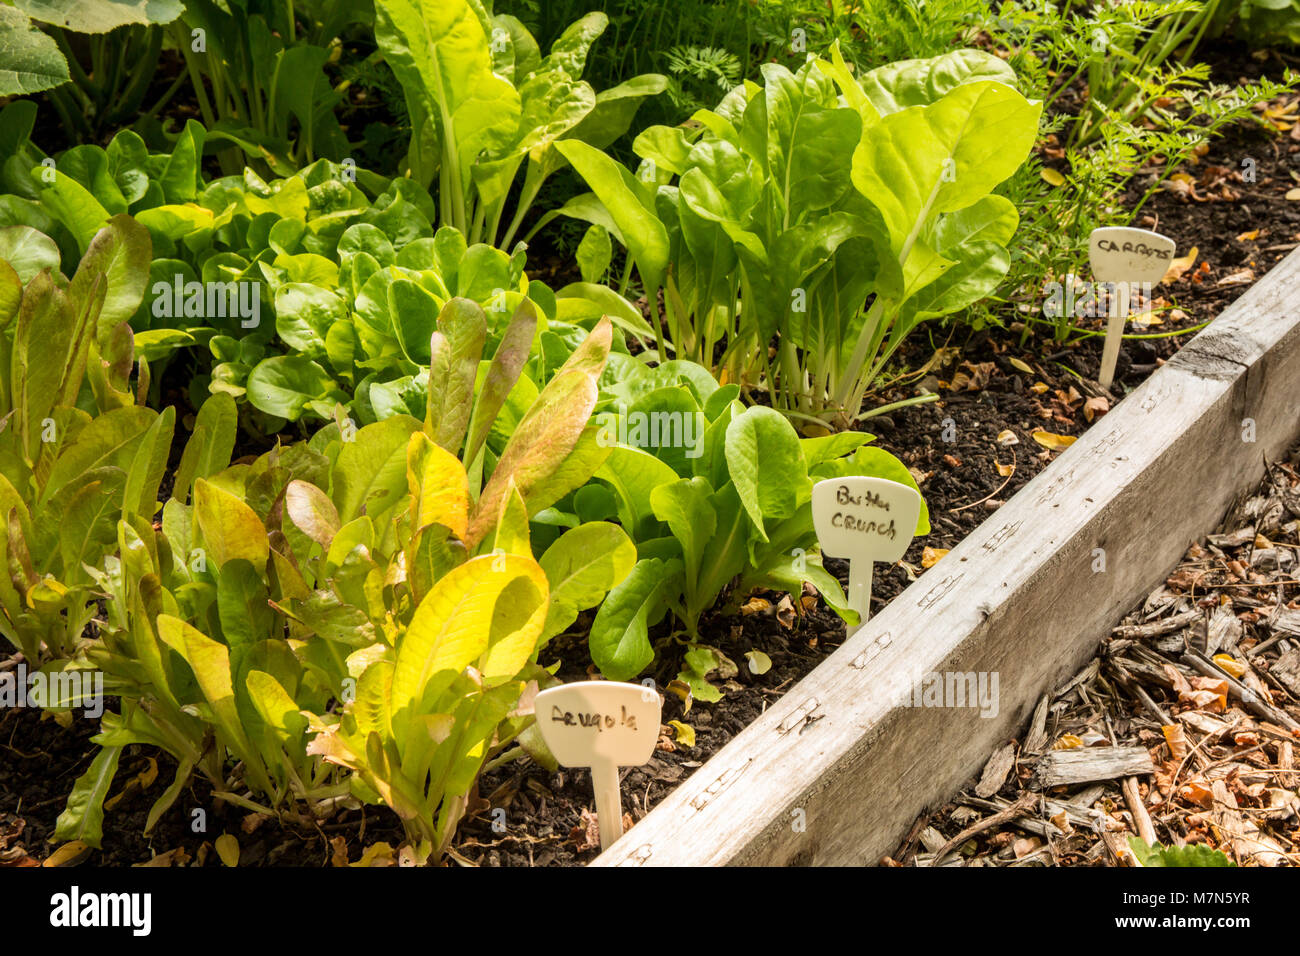 Rucola, Salat Buttercrunch, Collard Greens und Karotten in einer angehobenen Bett Garten wachsen. Stockfoto